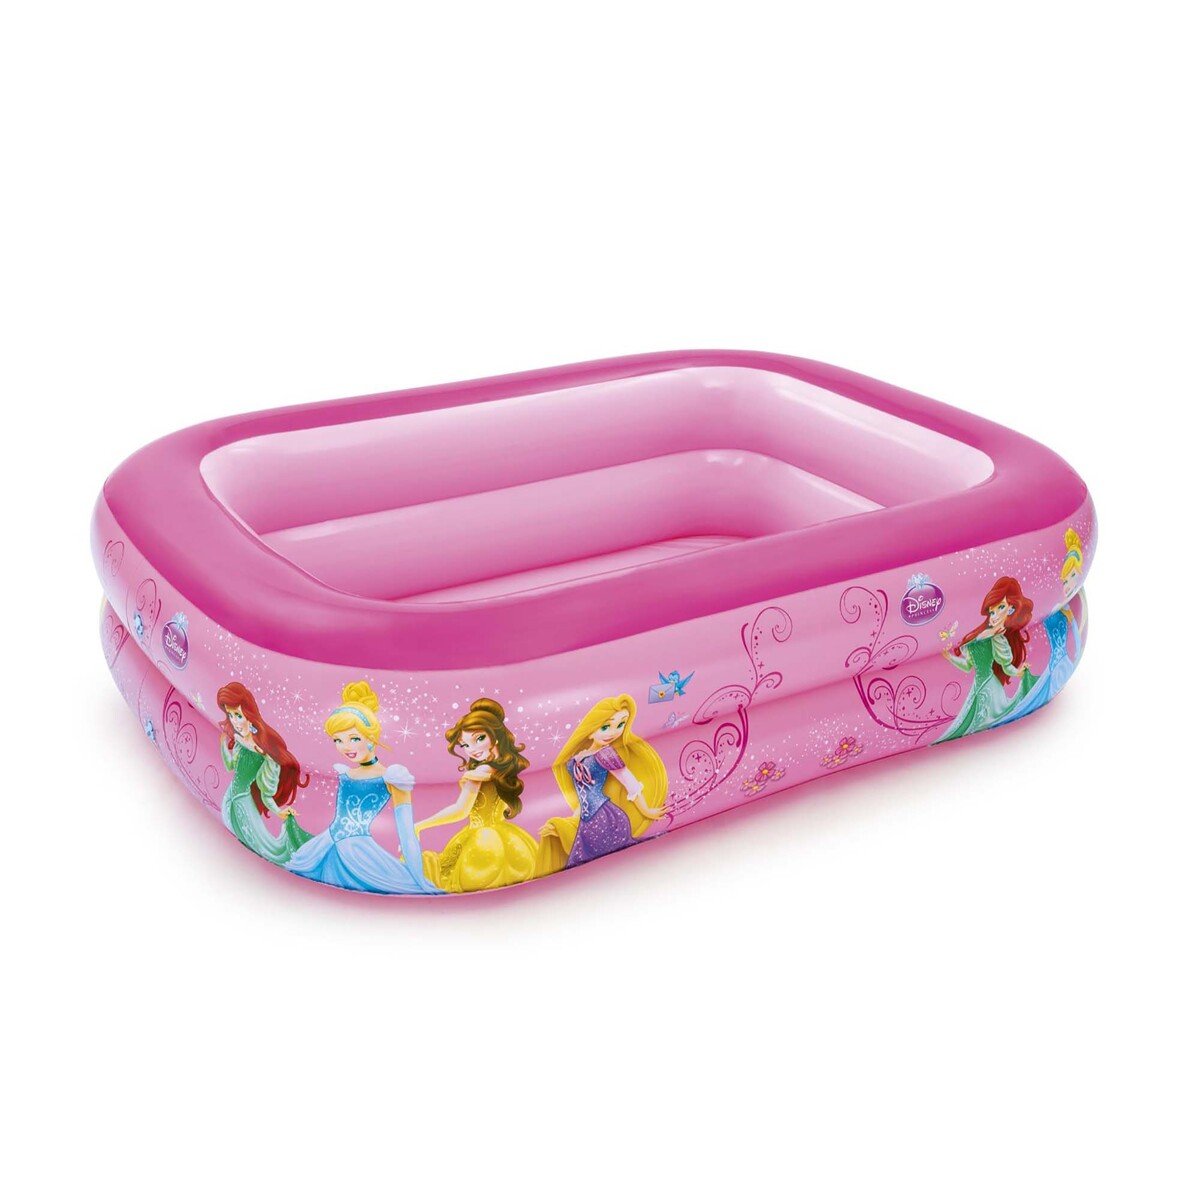 Bestway - Family Pool Princess Pink - 201X150X51cm 91056B